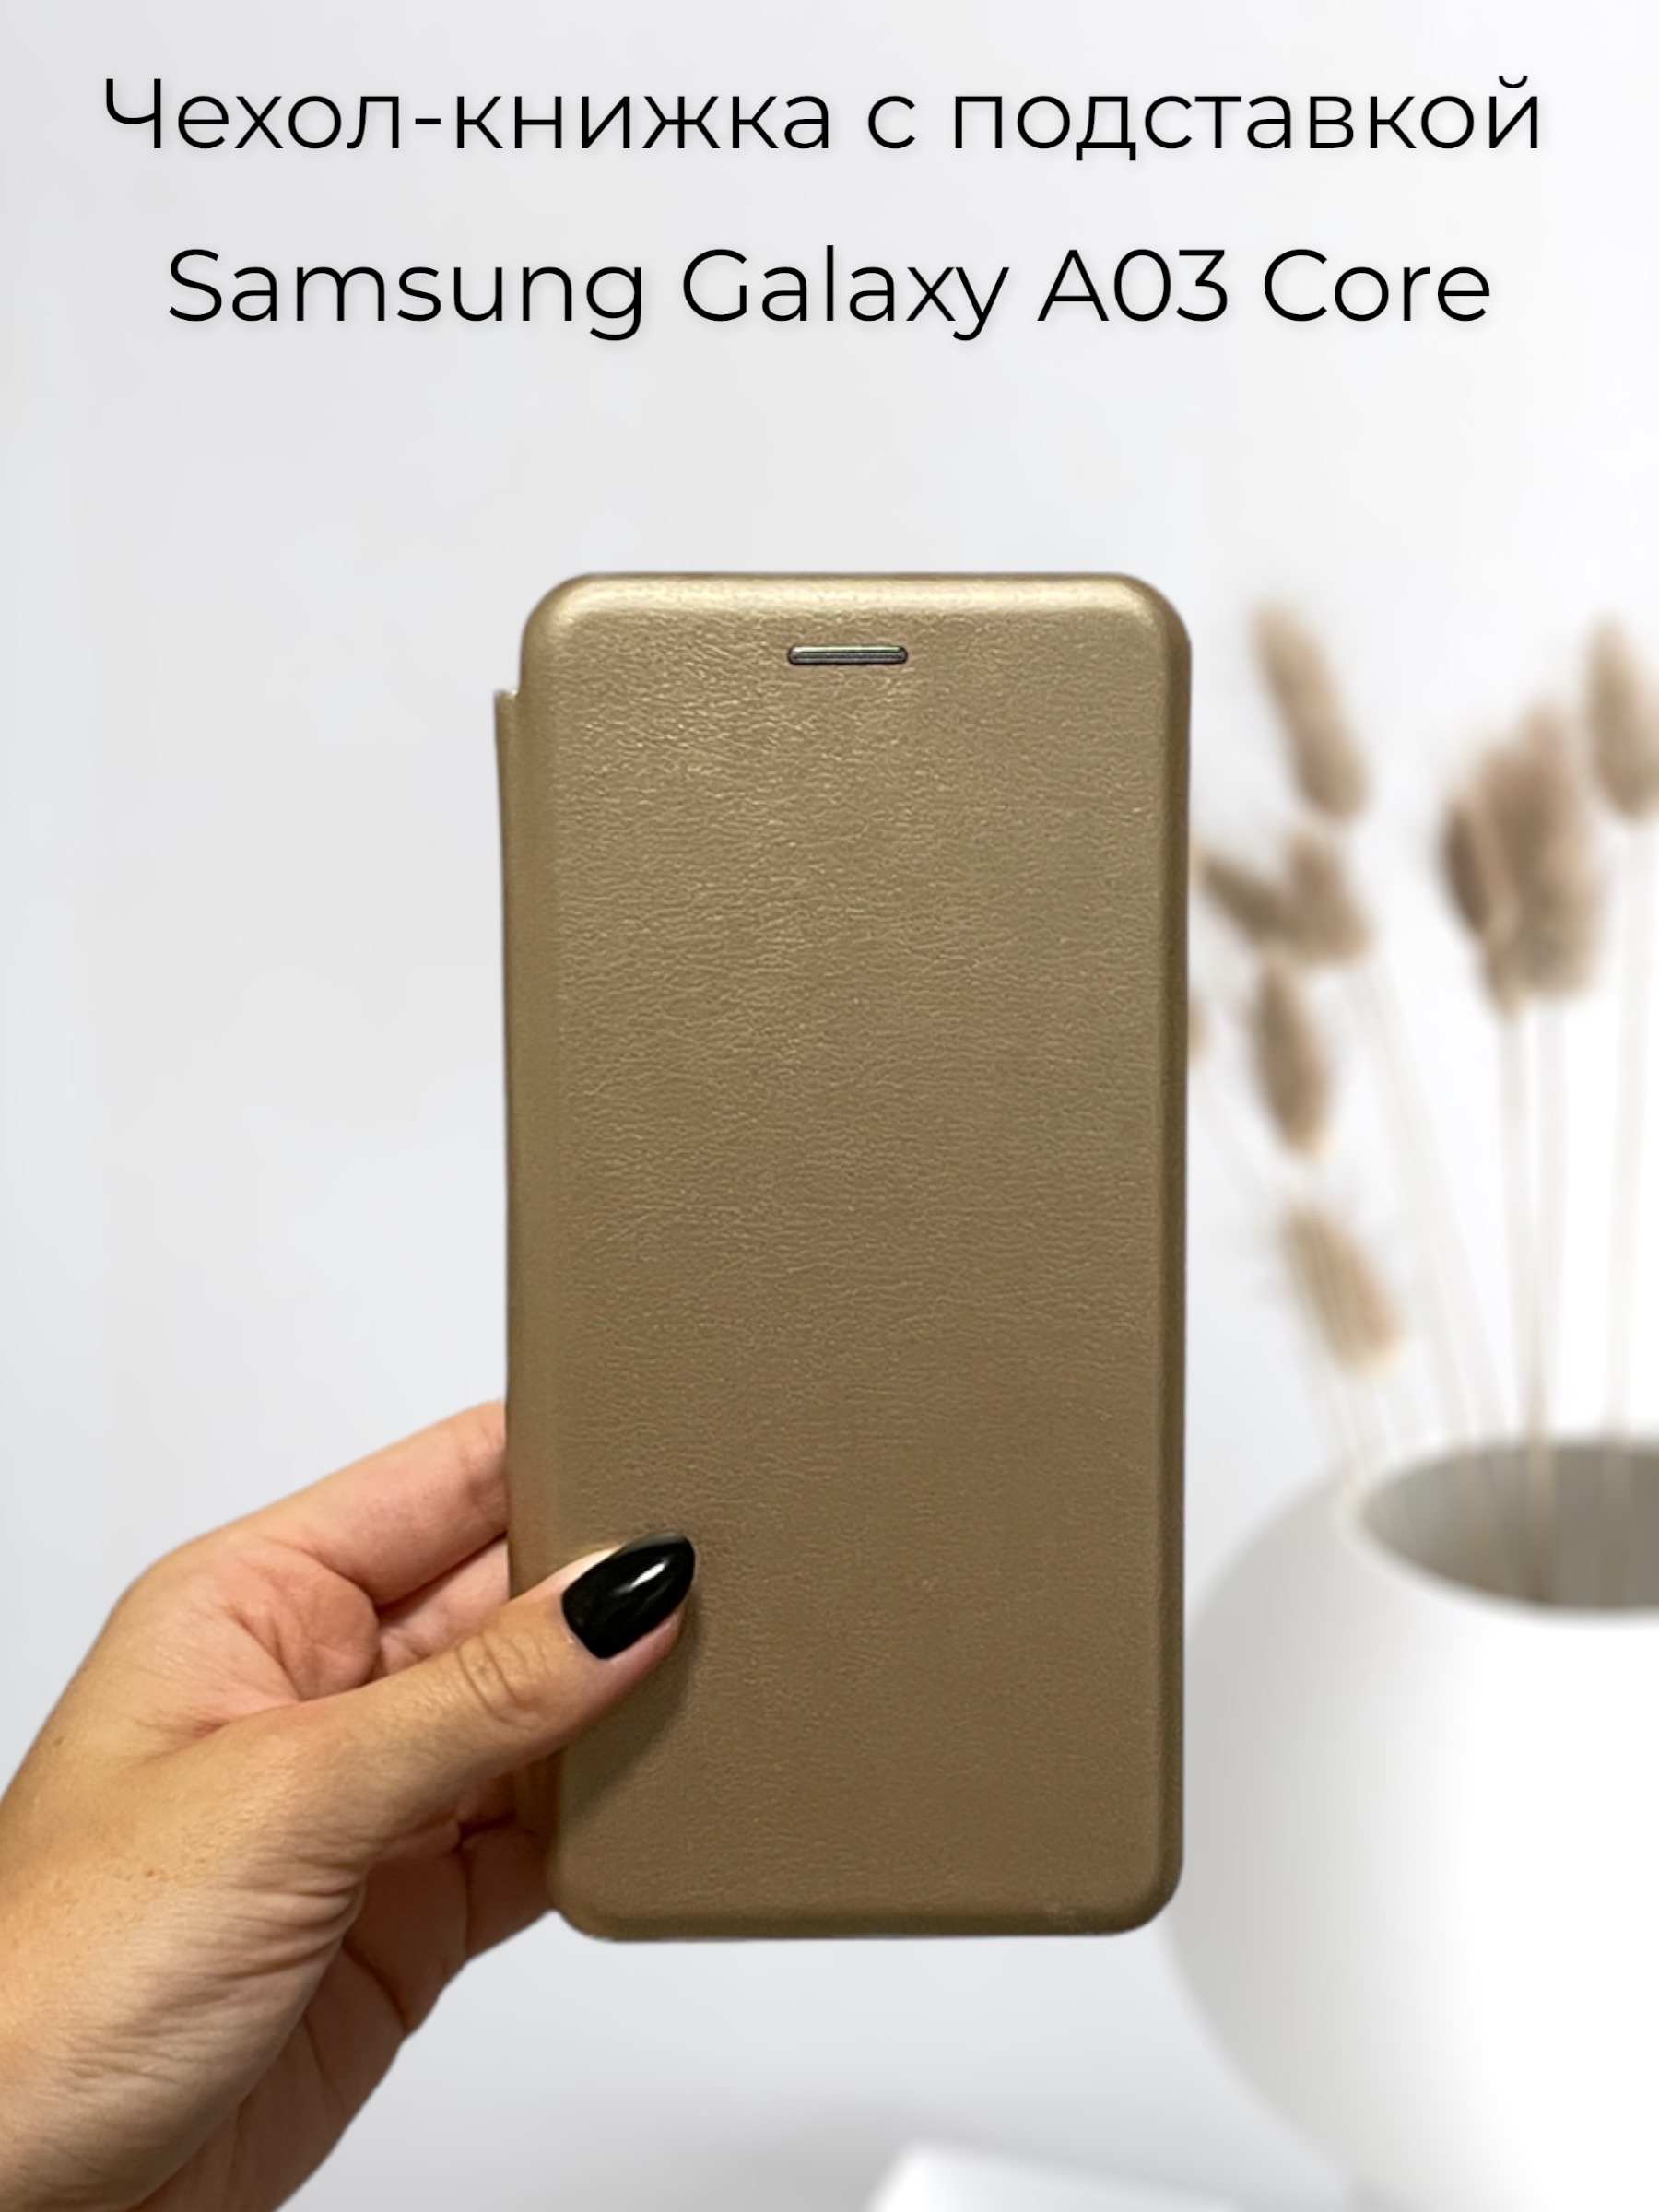 Самсунг а 03 коре. Samsung Galaxy a03 Core чехол книжка. Самсунг а 03 кор. Samsung Galaxy a03 Core. Samsung a03 Core чехол.